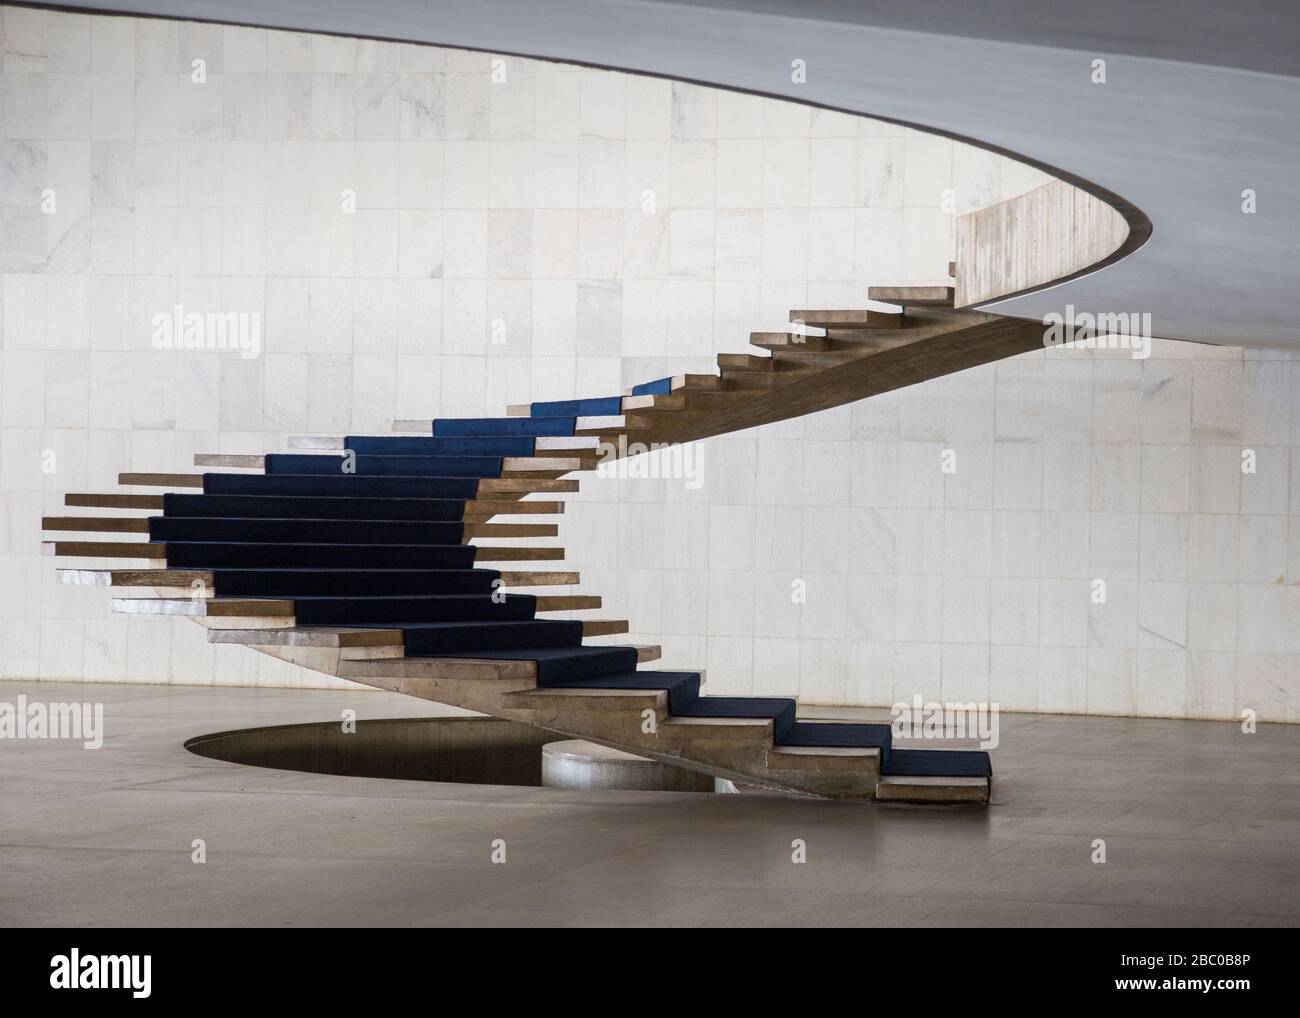 Modernist design of stairs seen inside Itamaraty Palace, Brazilia Stock Photo